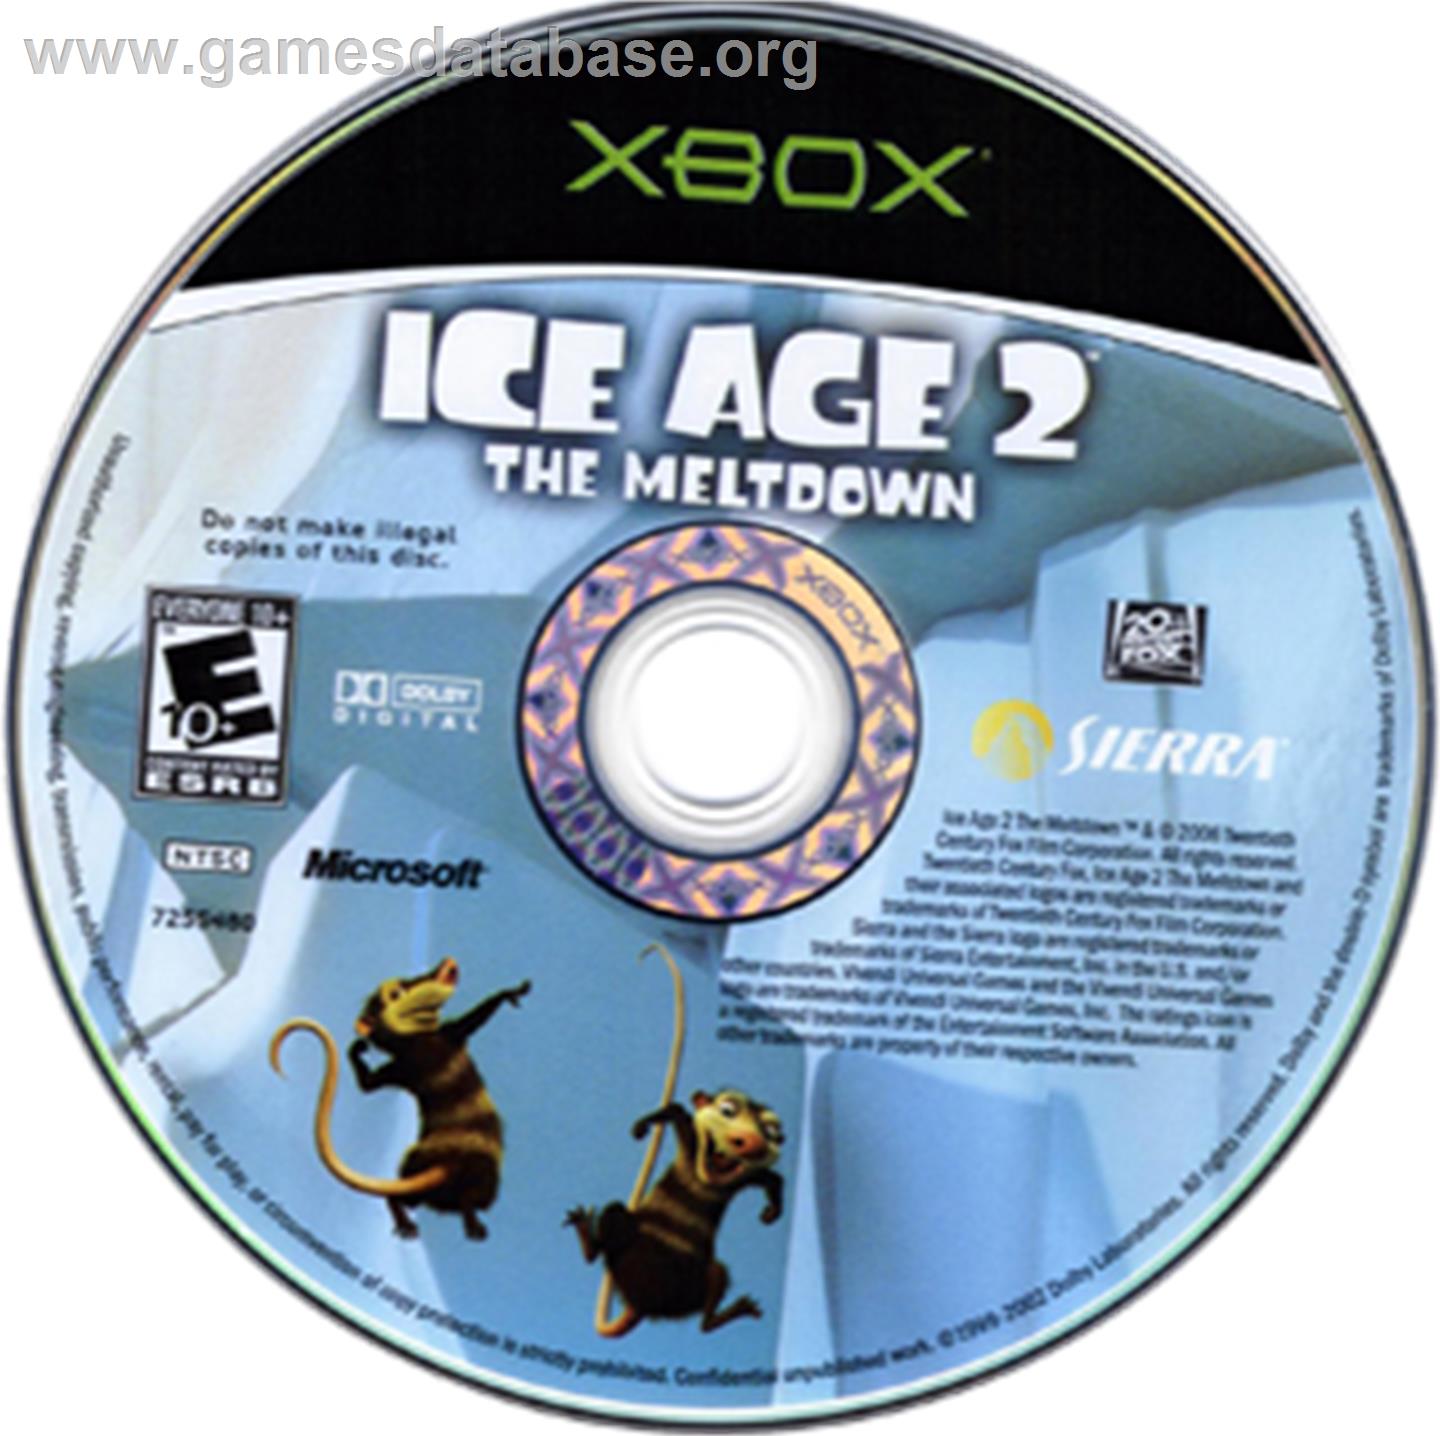 Ice Age 2: The Meltdown - Microsoft Xbox - Artwork - CD